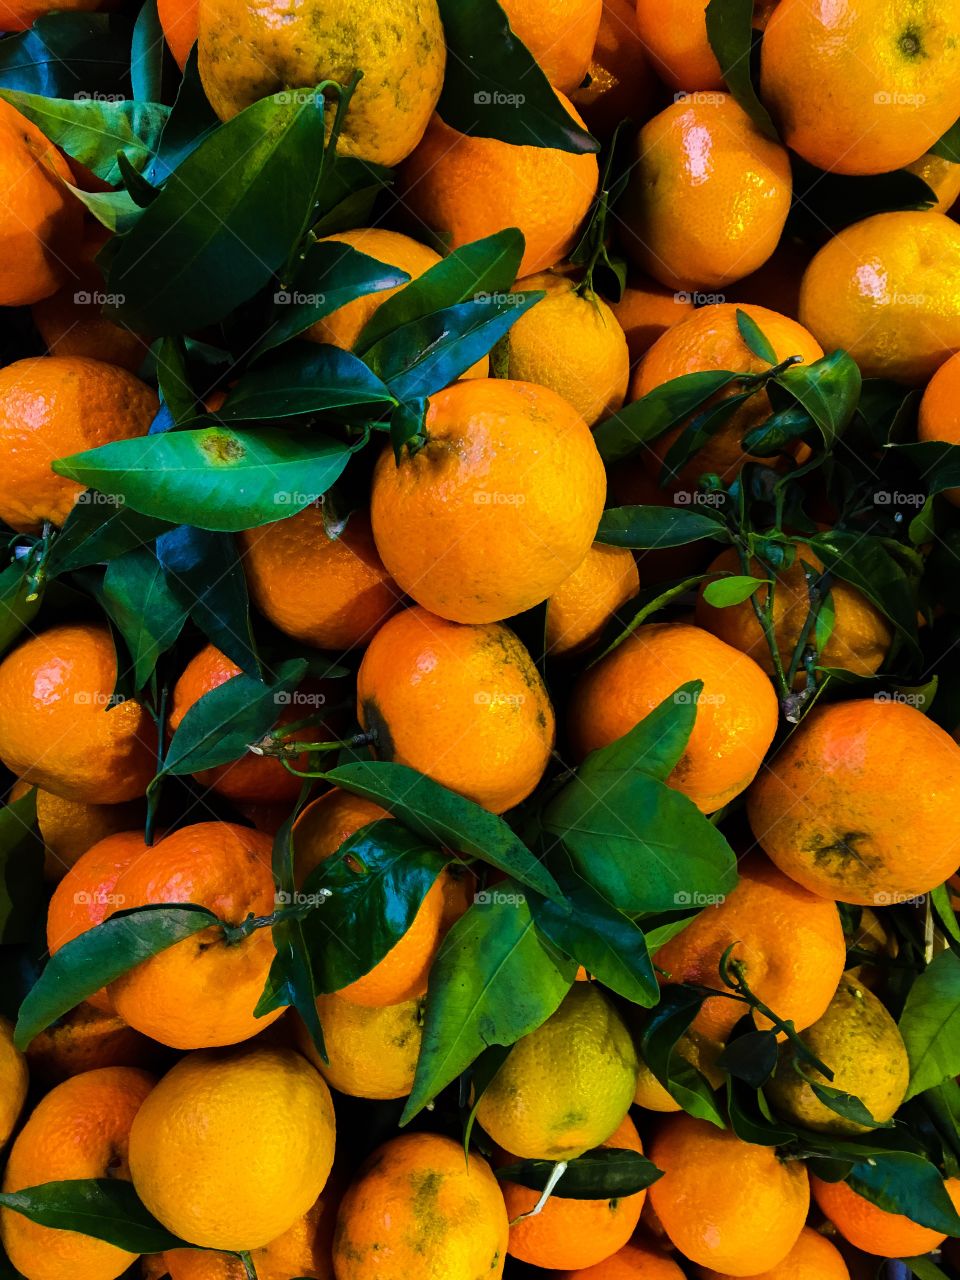 Yummy clementines/mandarins